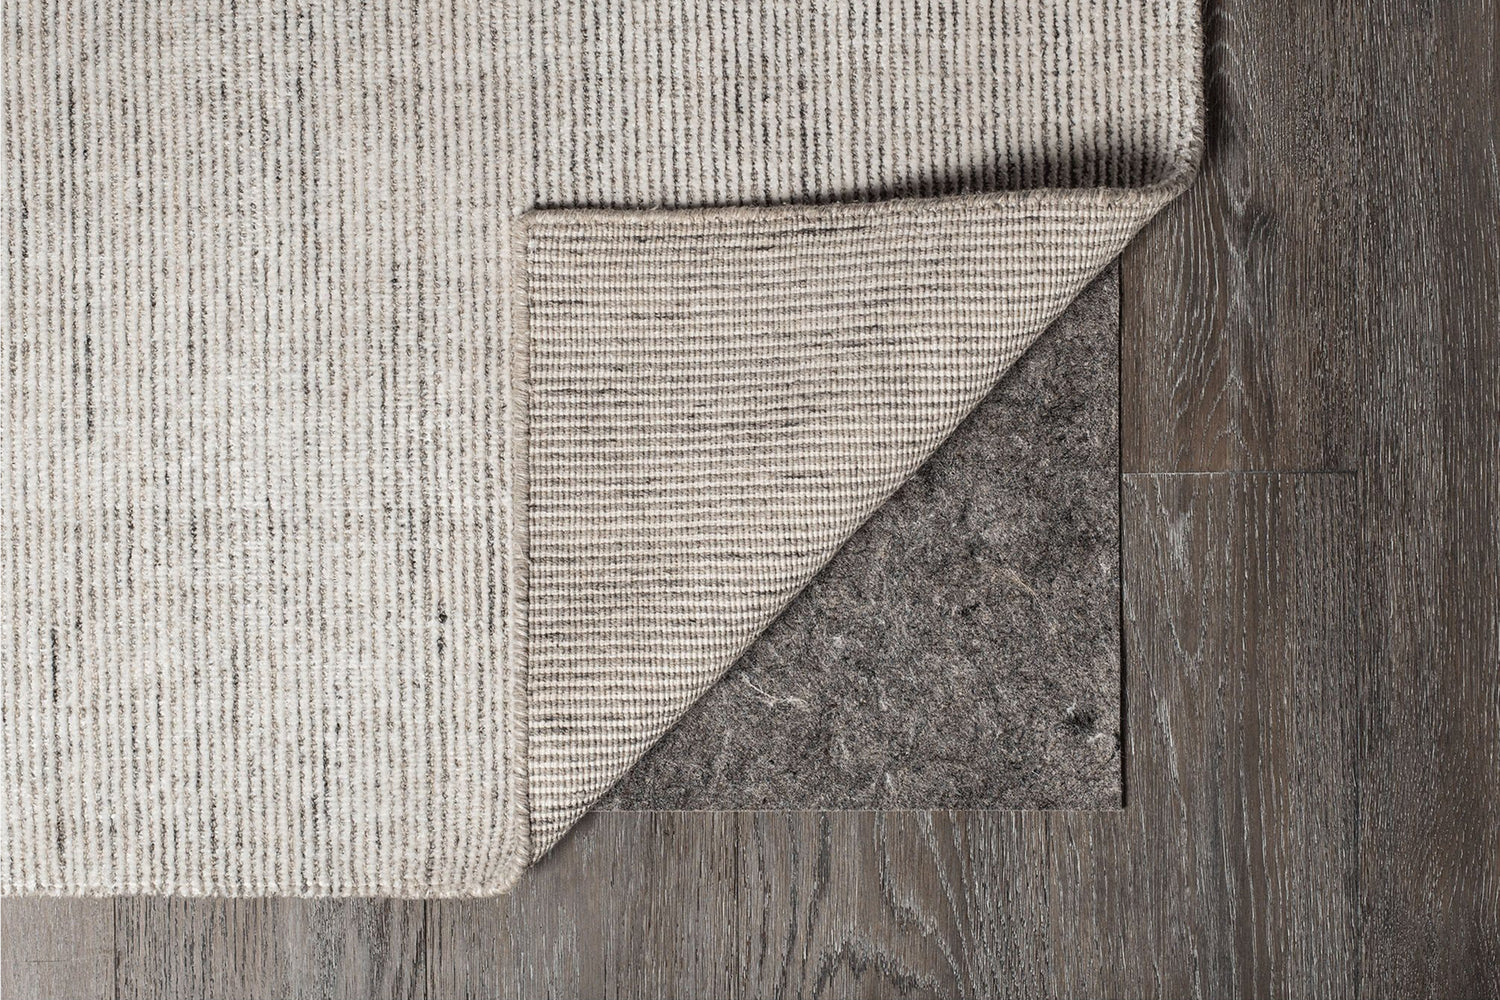 Millennium Rug Pad in Gray, 6' x 9' by Bassett Furniture